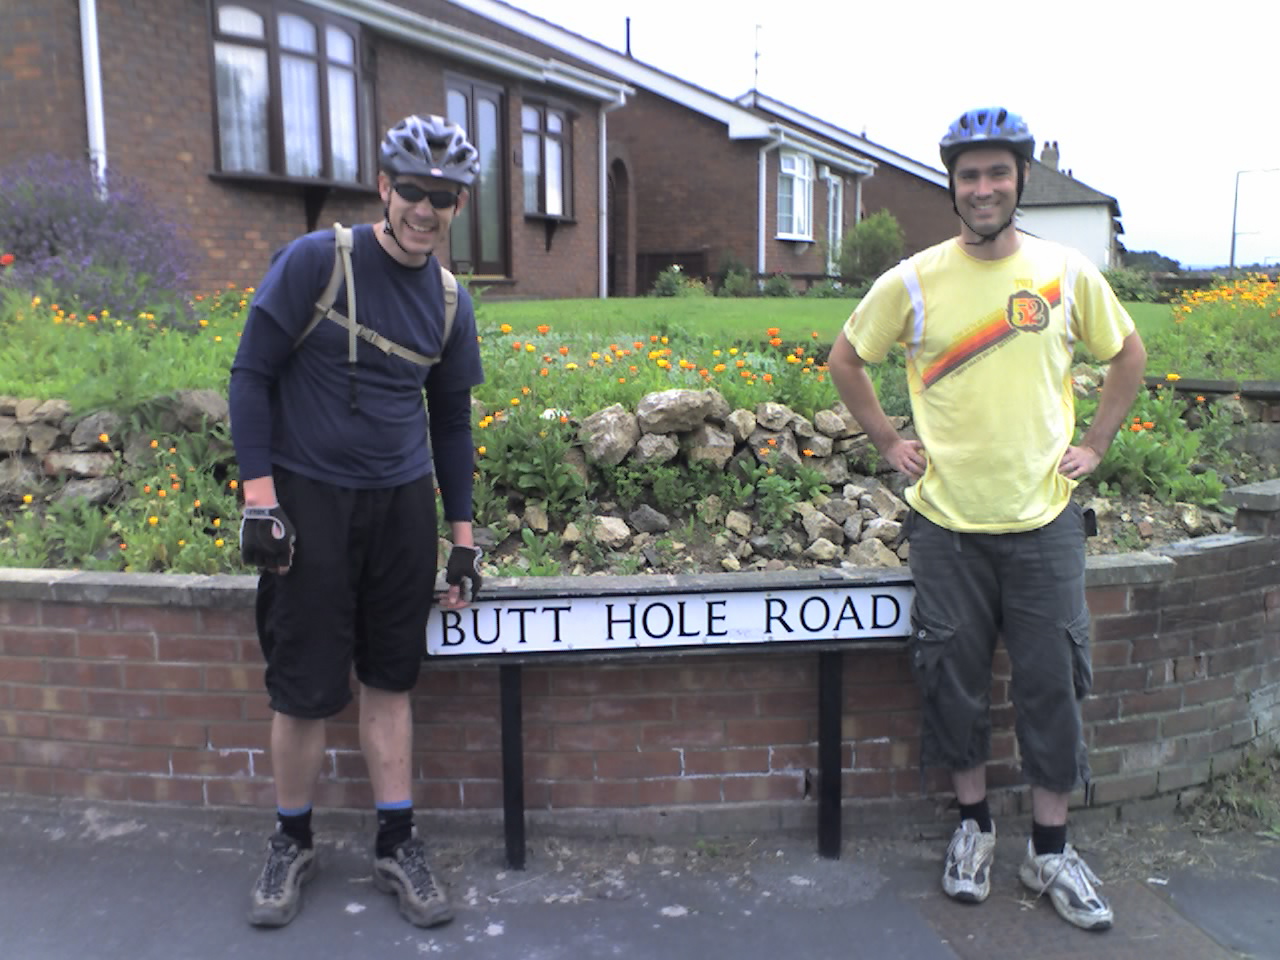 Butt Hole Road - Wikipedia